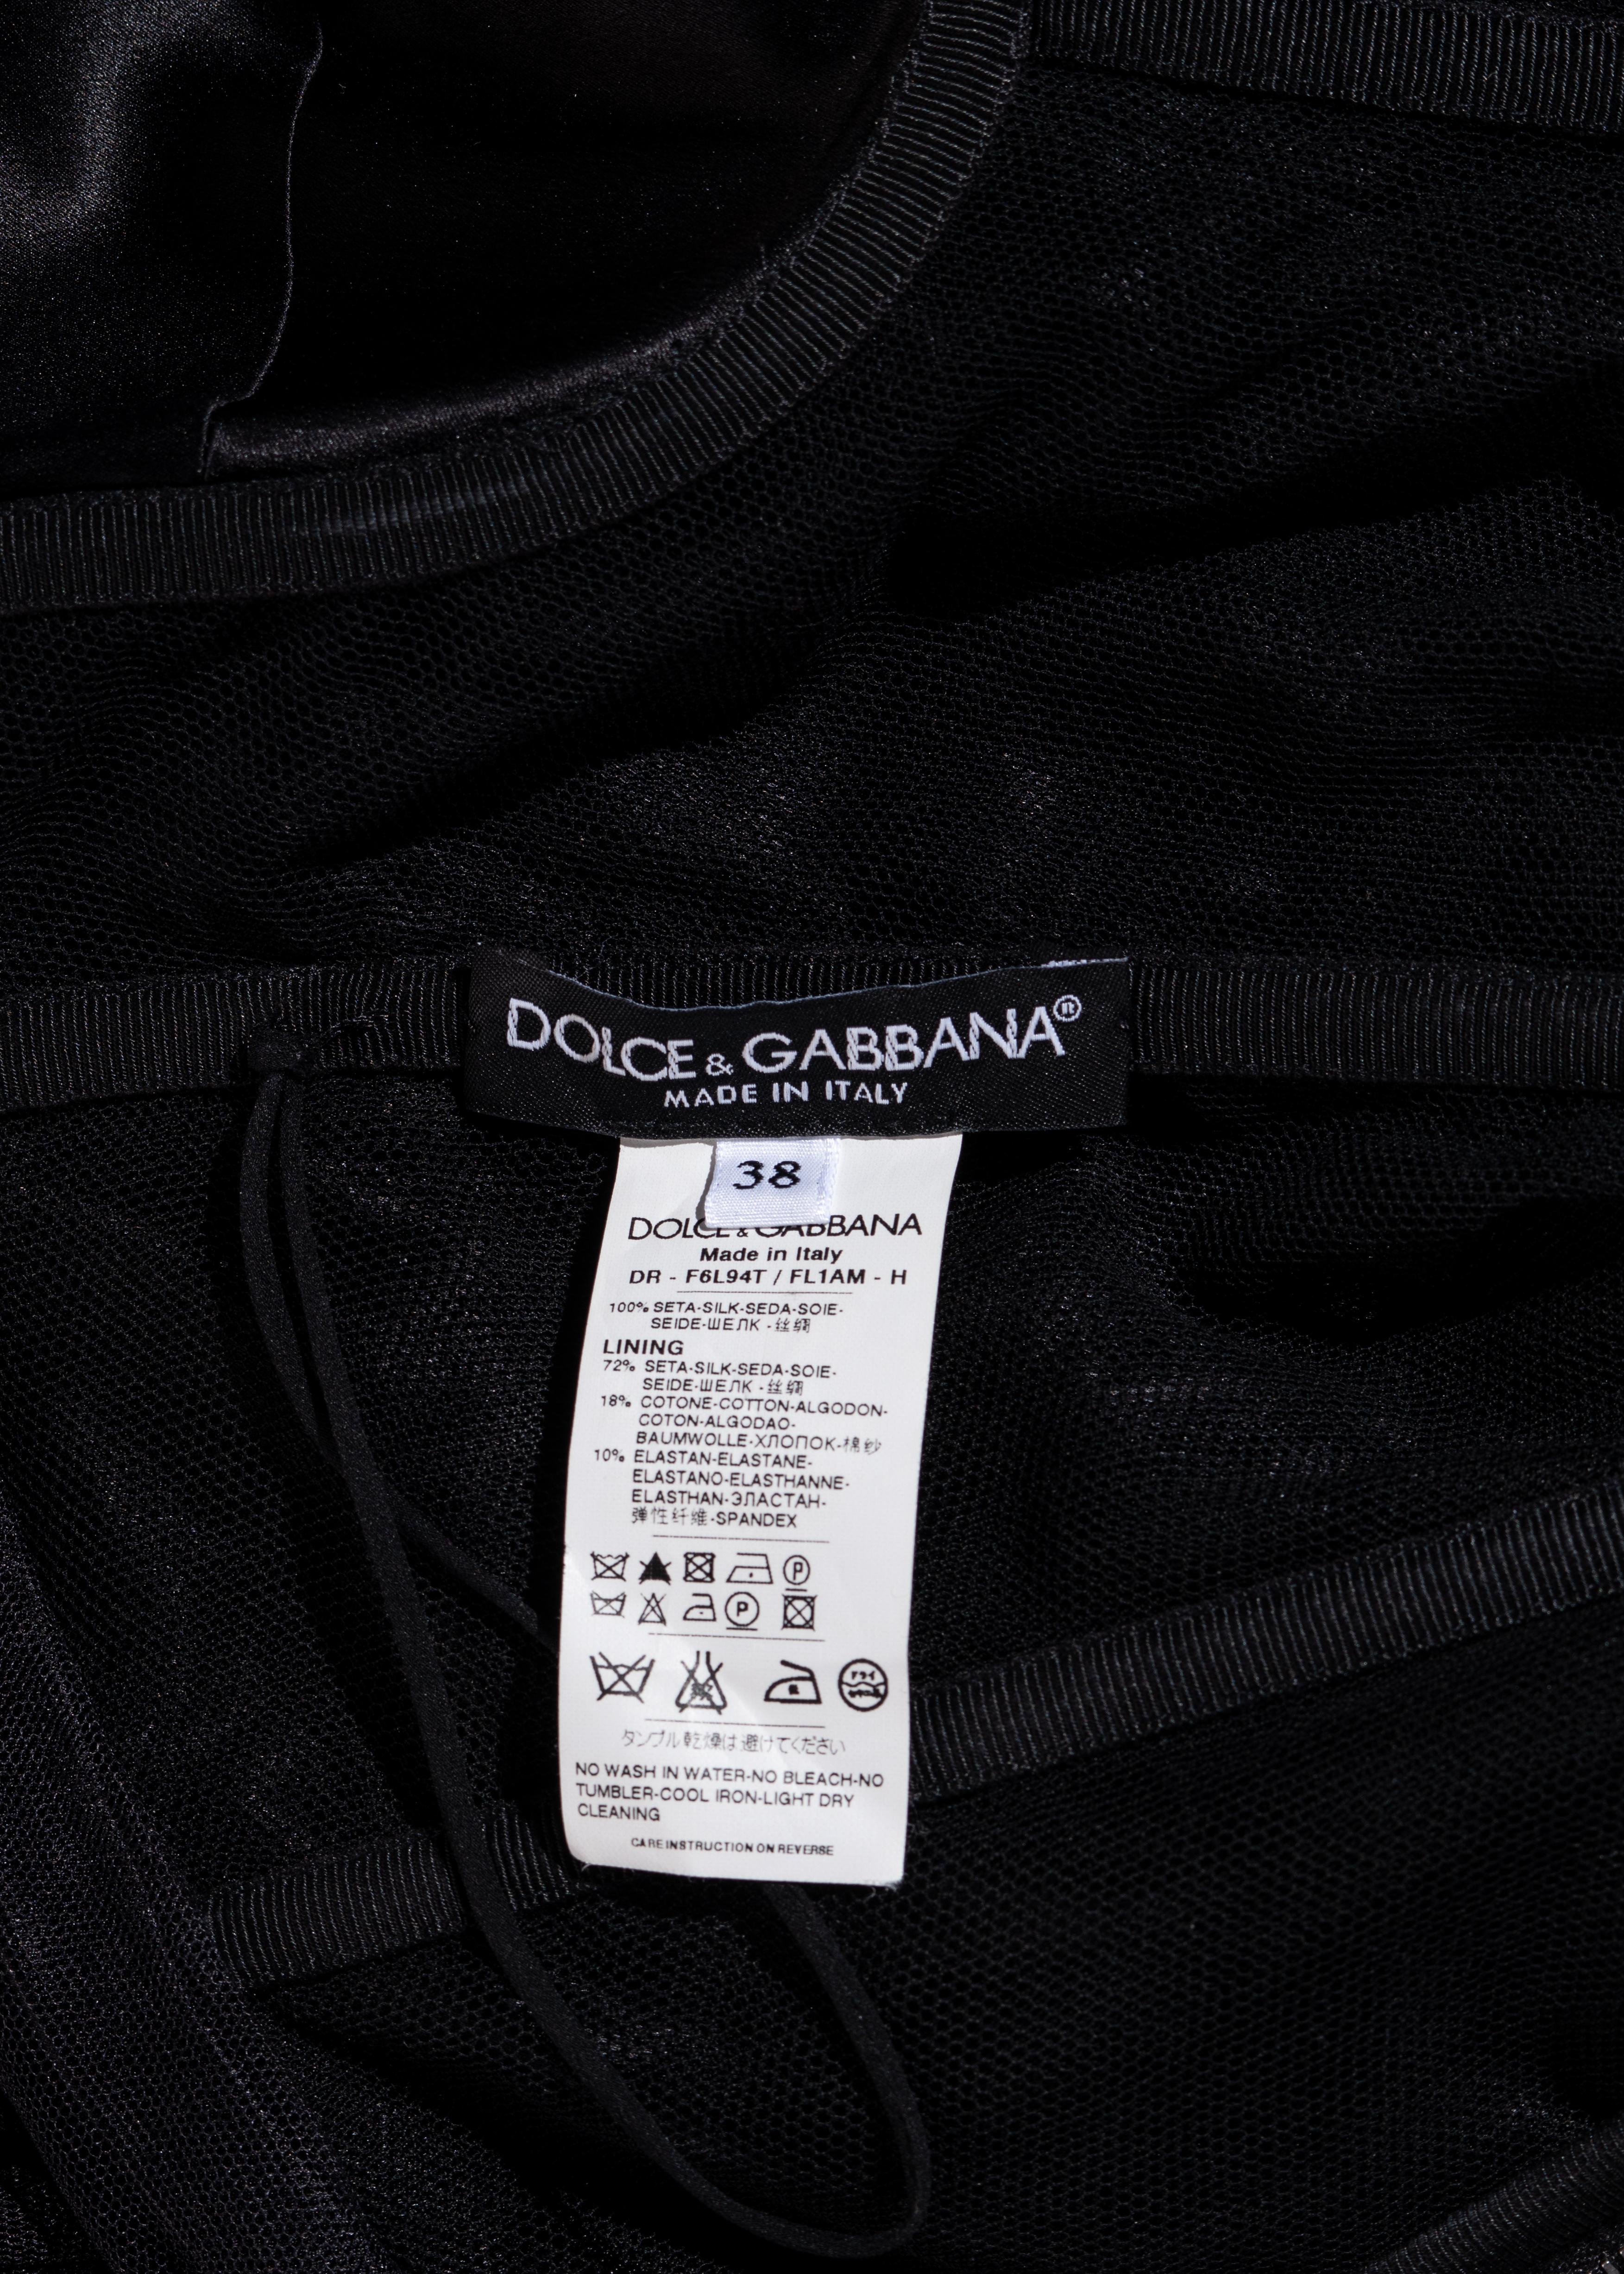 Dolce & Gabbana black silk mesh strapless corseted maxi dress, c. 2000's 2